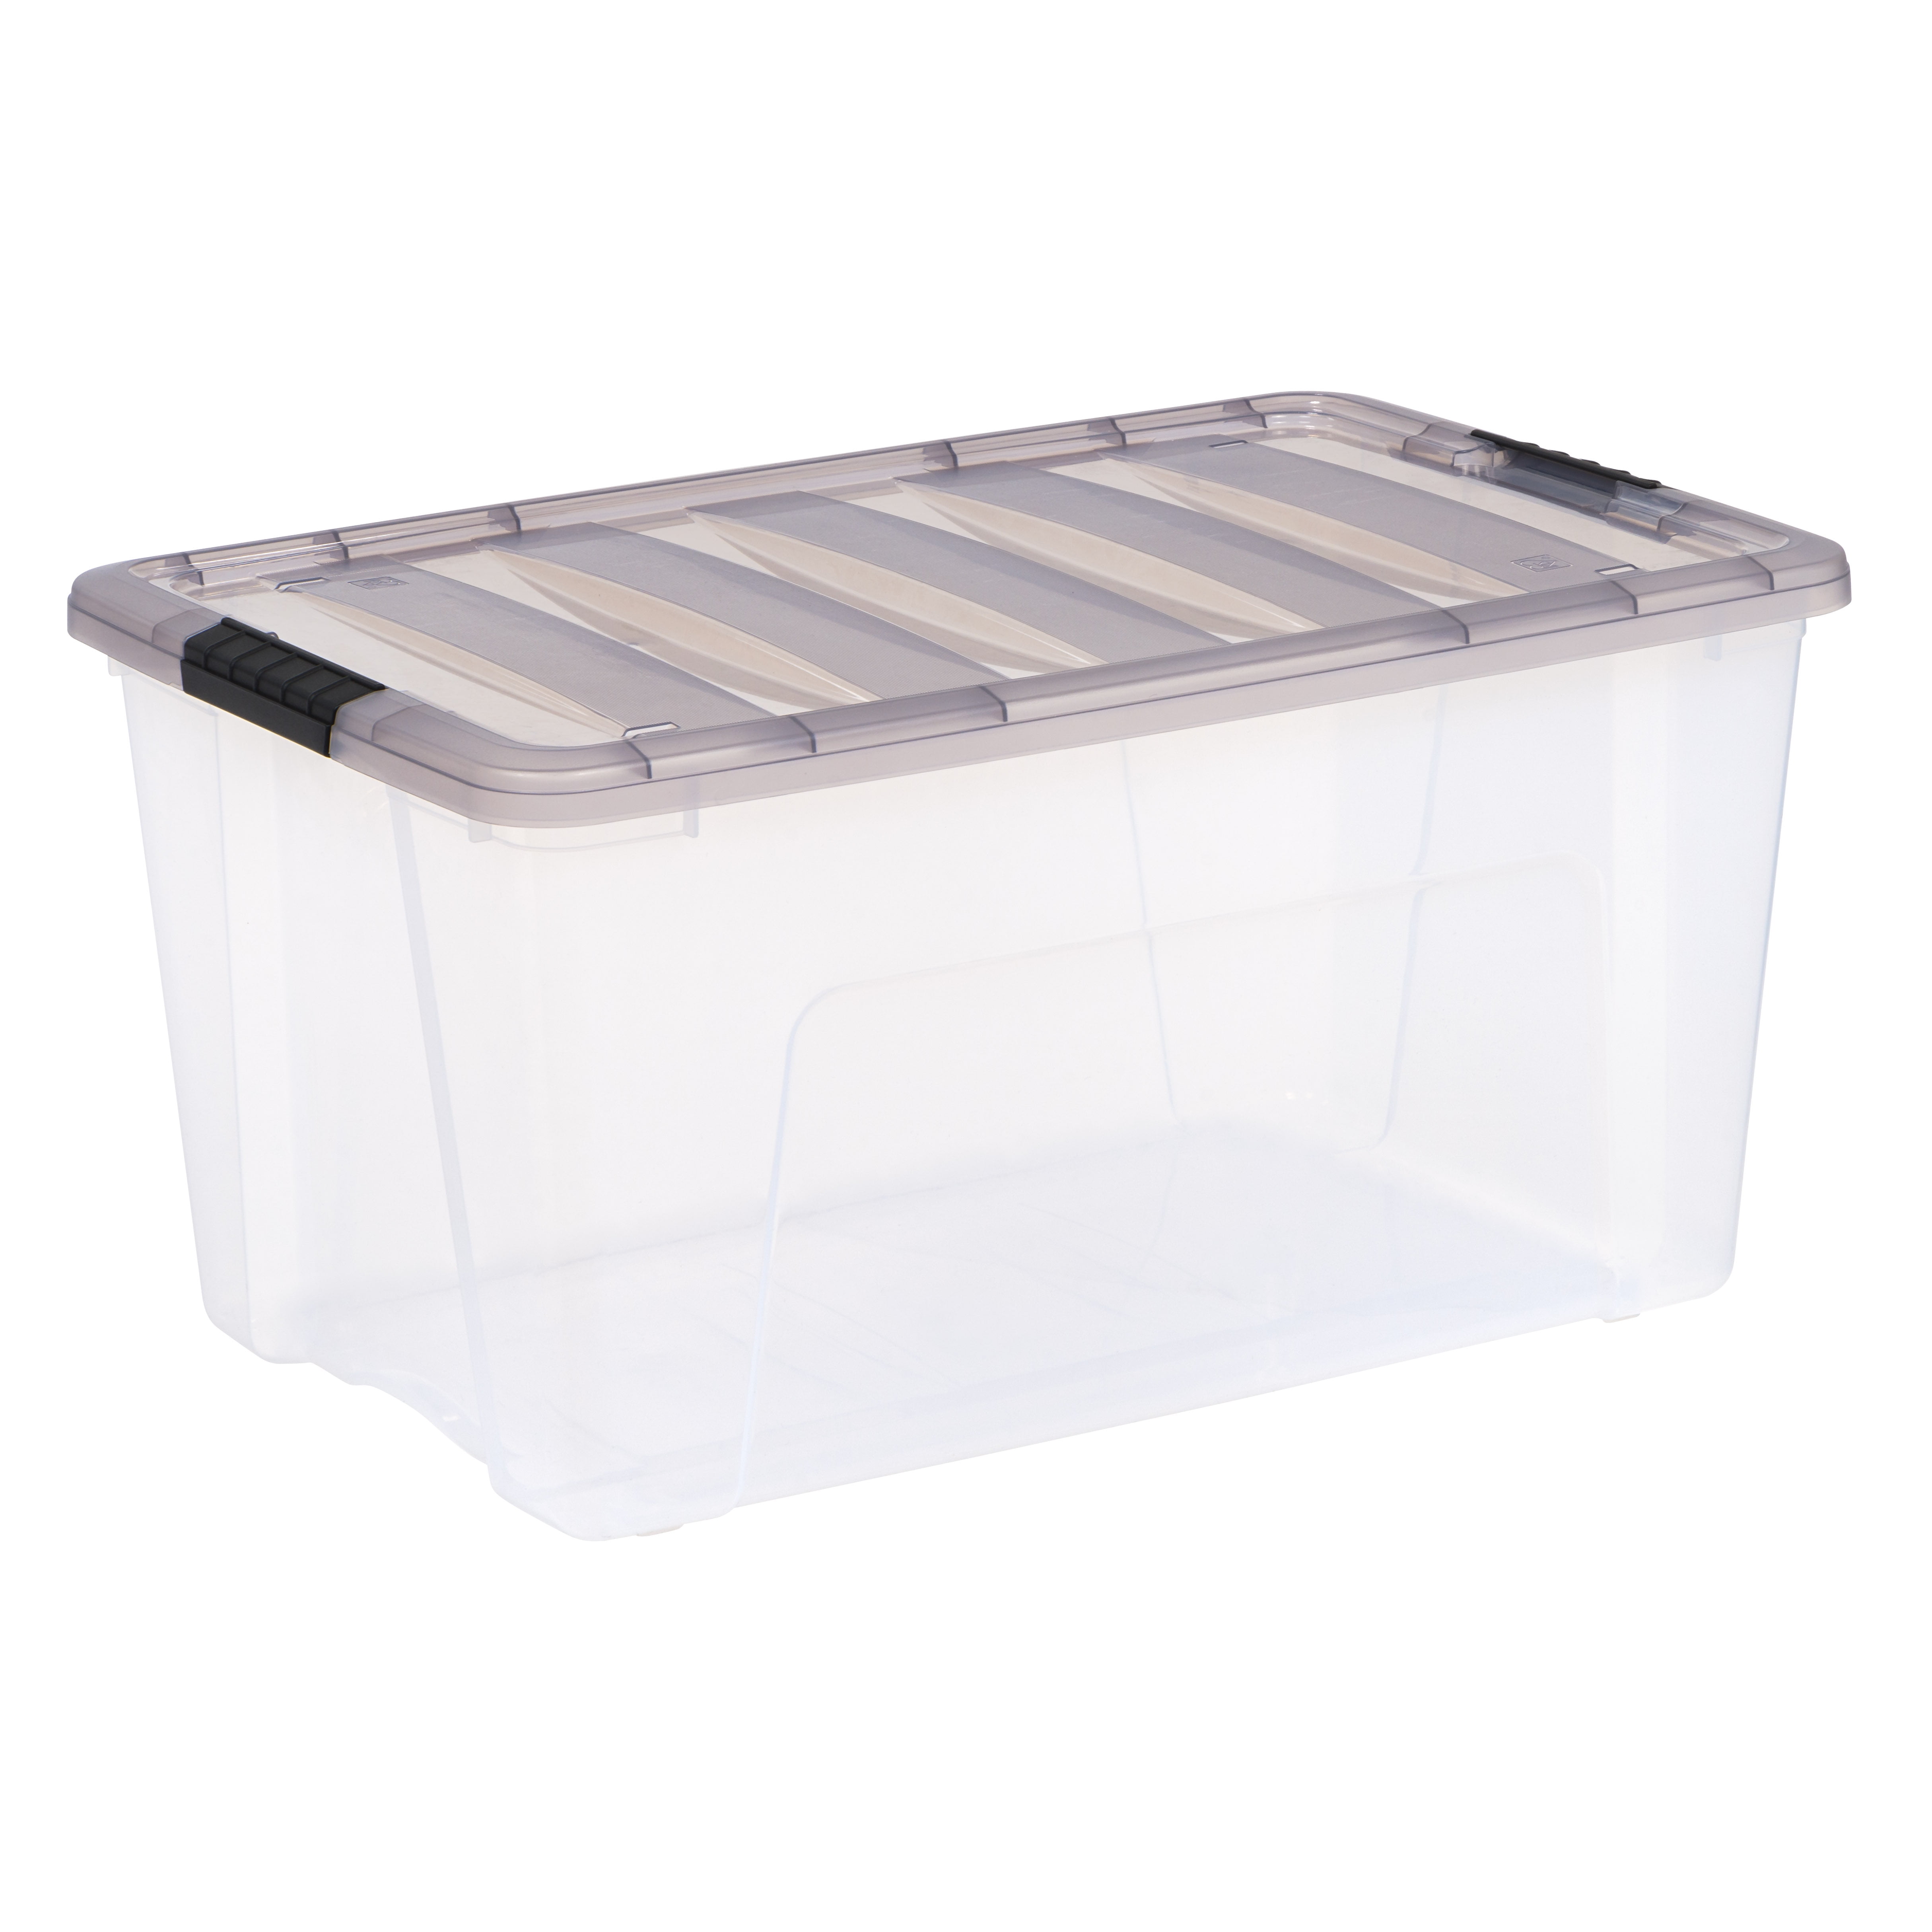 Storage Box Plastic Container Bins W/ Lids Lockable 20 Qt Clear View Set of  6 US